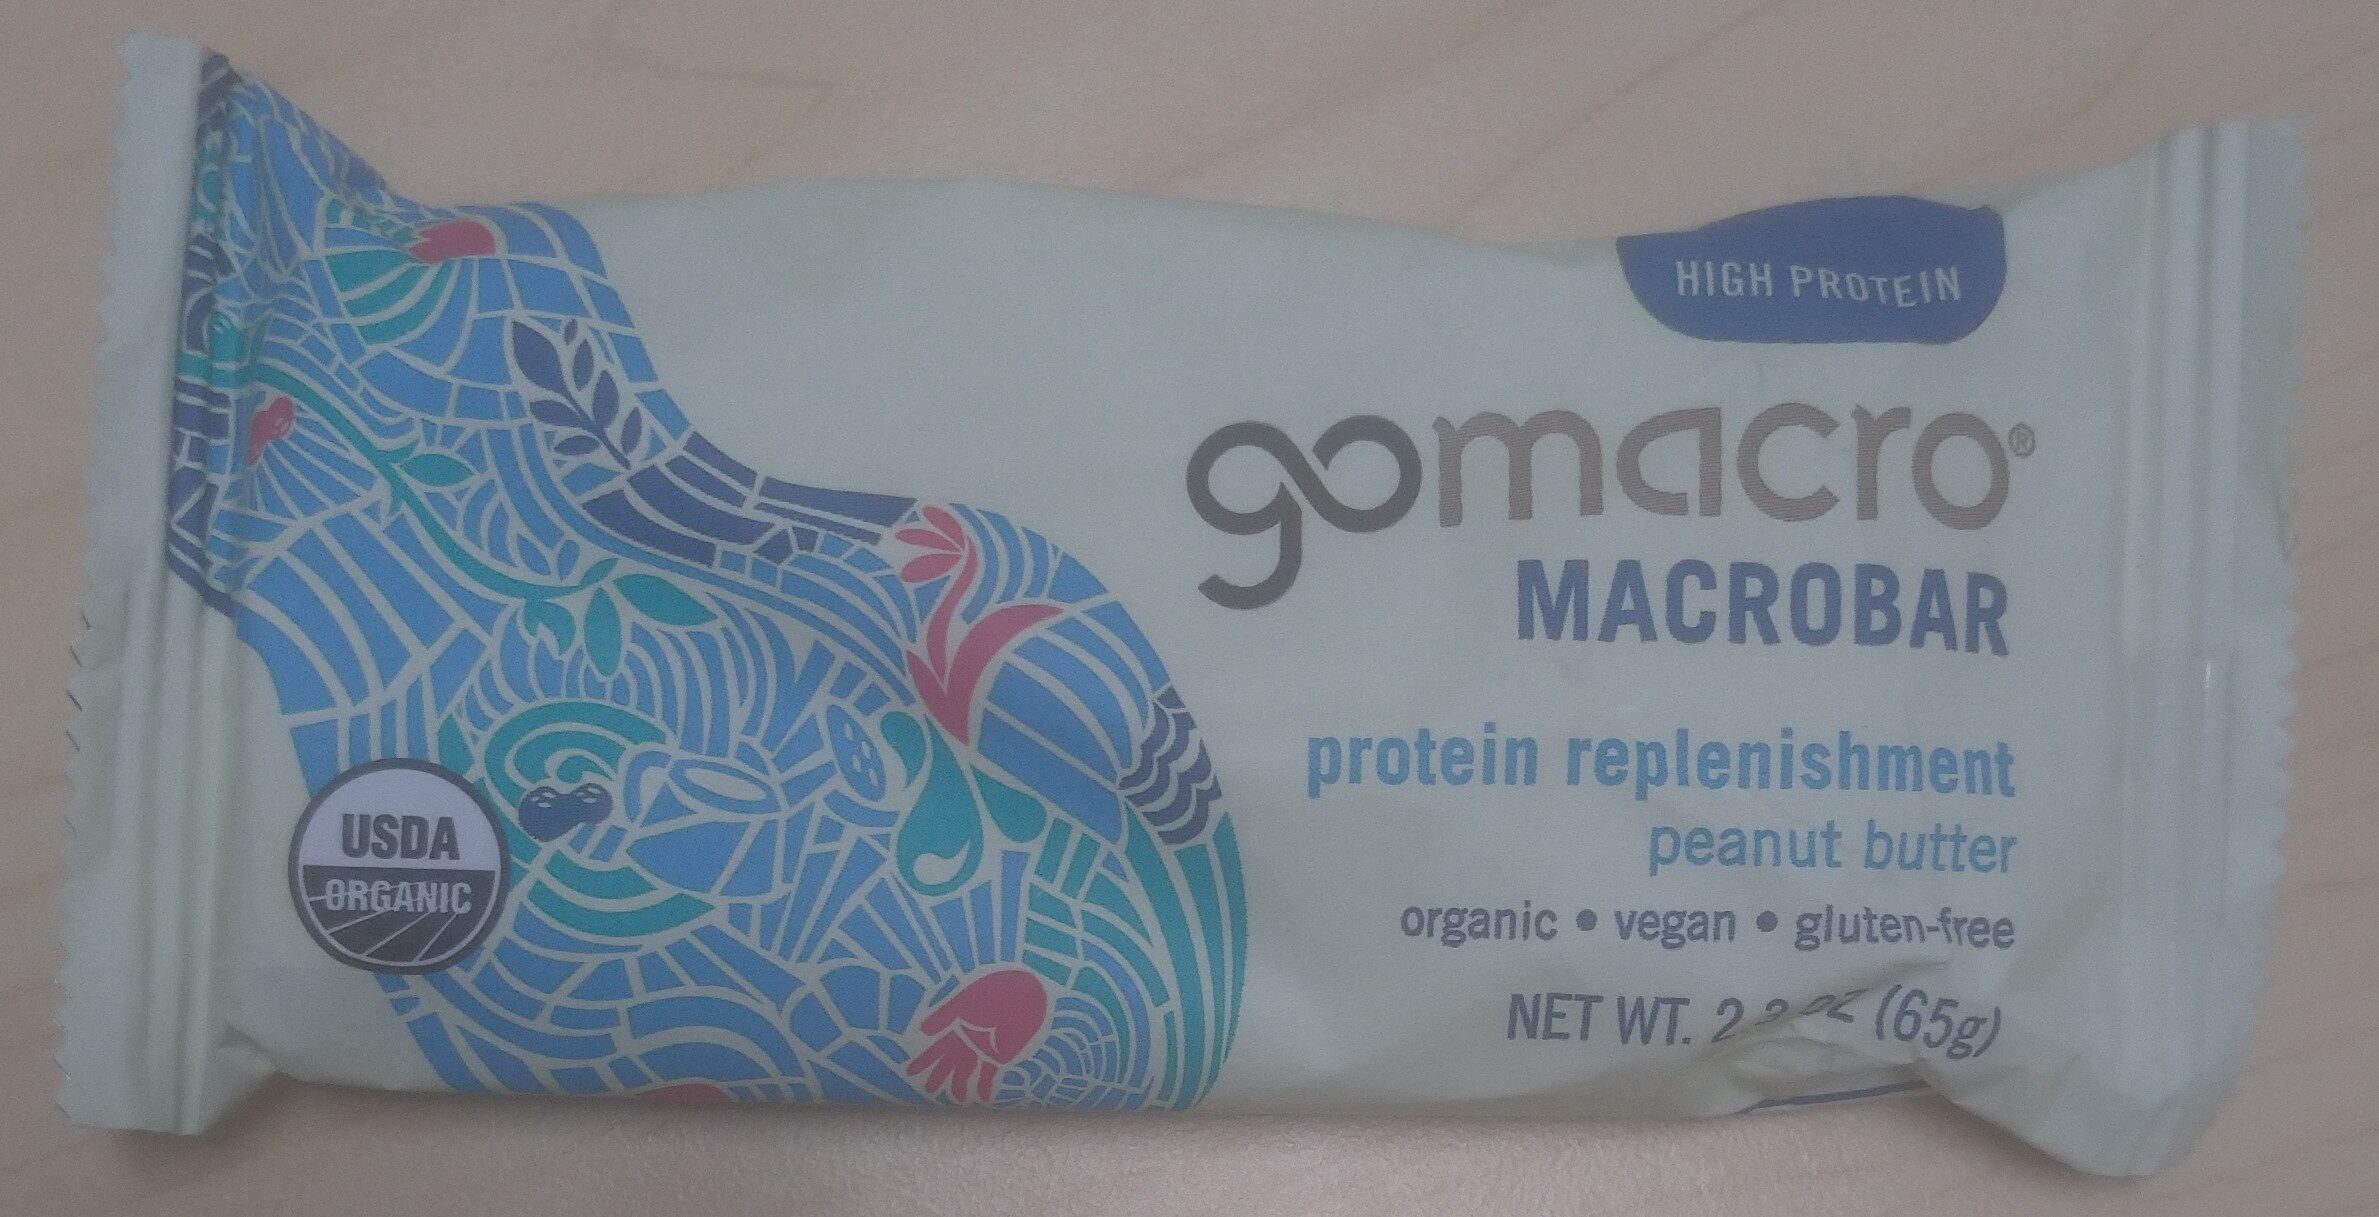 Peanut Butter Protein Replenishment MACROBAR - Product - en